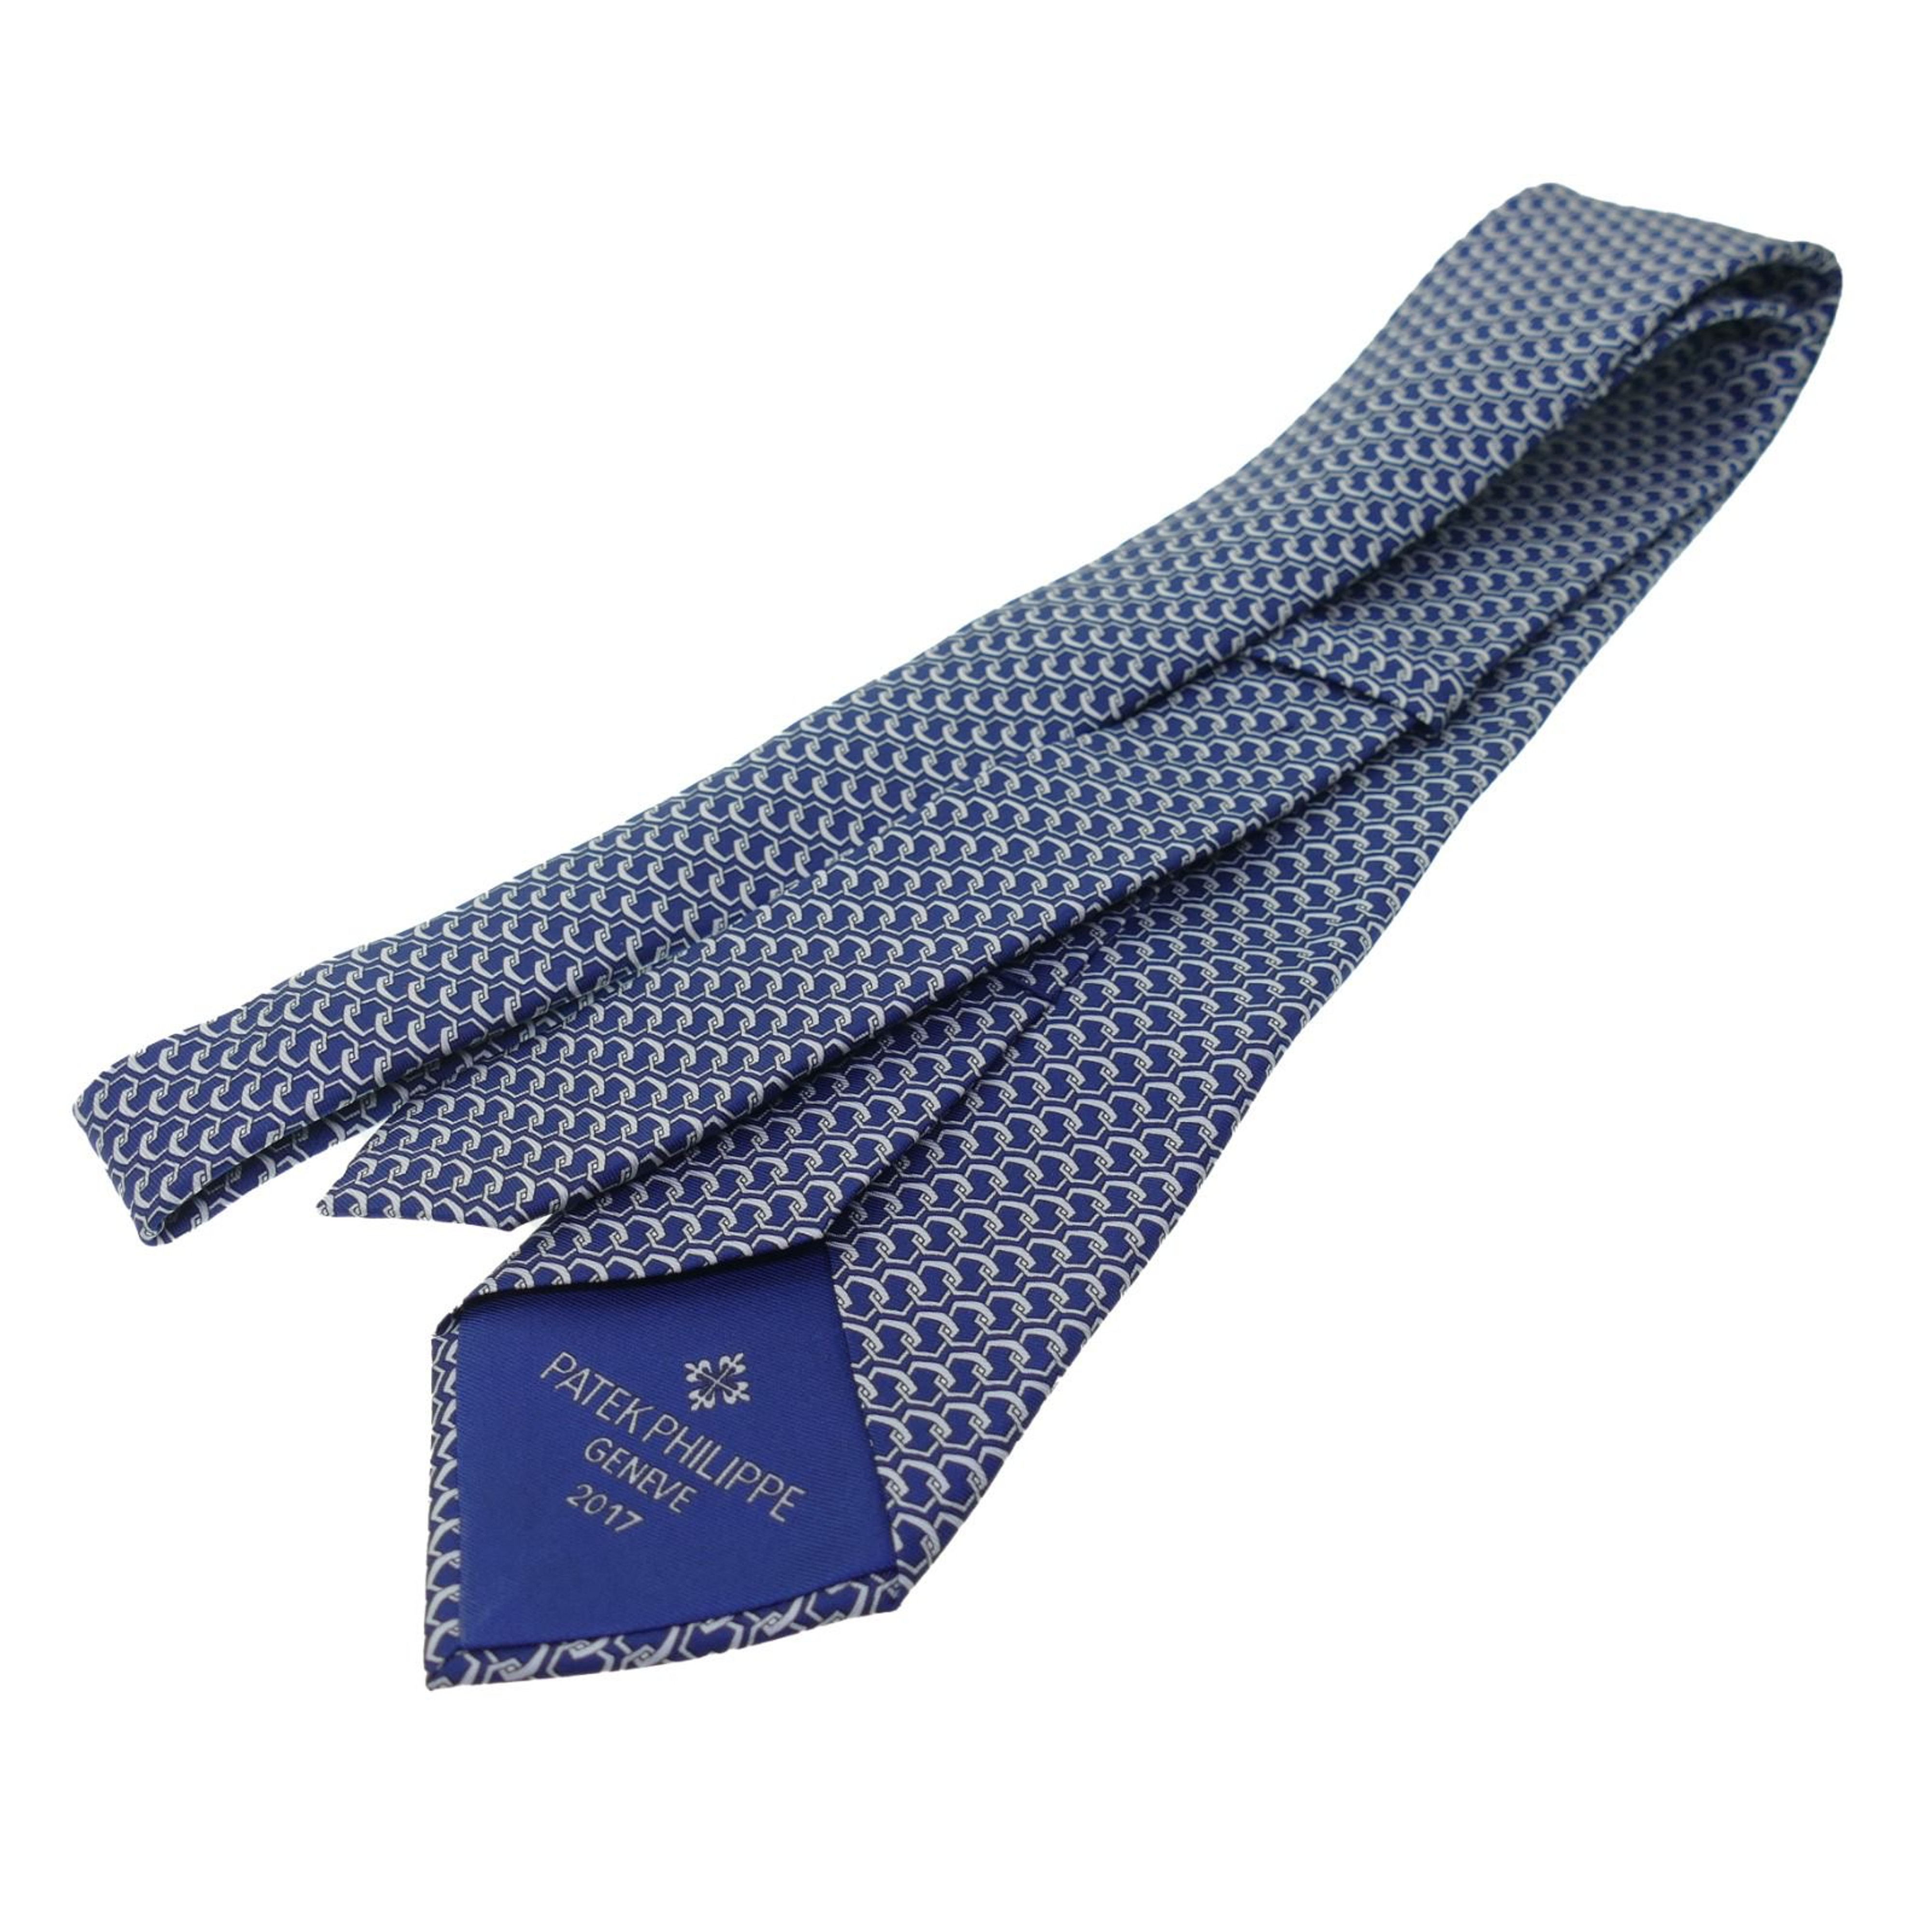 Patek Philippe Blue Pattern Tie - DelrayWatch.com